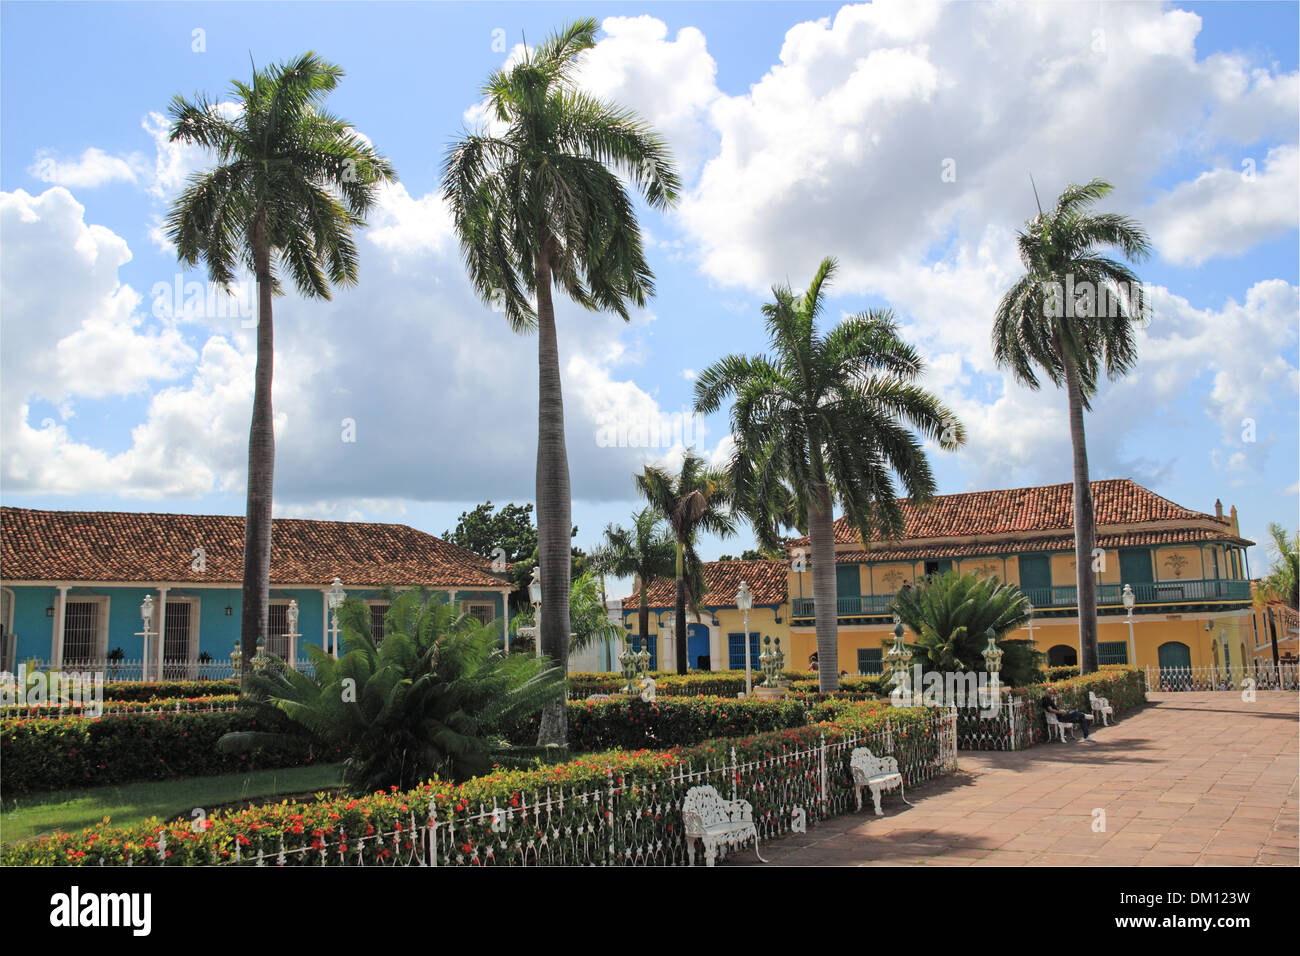 Museo de Arquitectura Colonial and Casa de Aldemán Ortiz, Plaza Mayor, Trinidad, Sancti Spiritus province, Cuba, Caribbean Sea, Central America Stock Photo